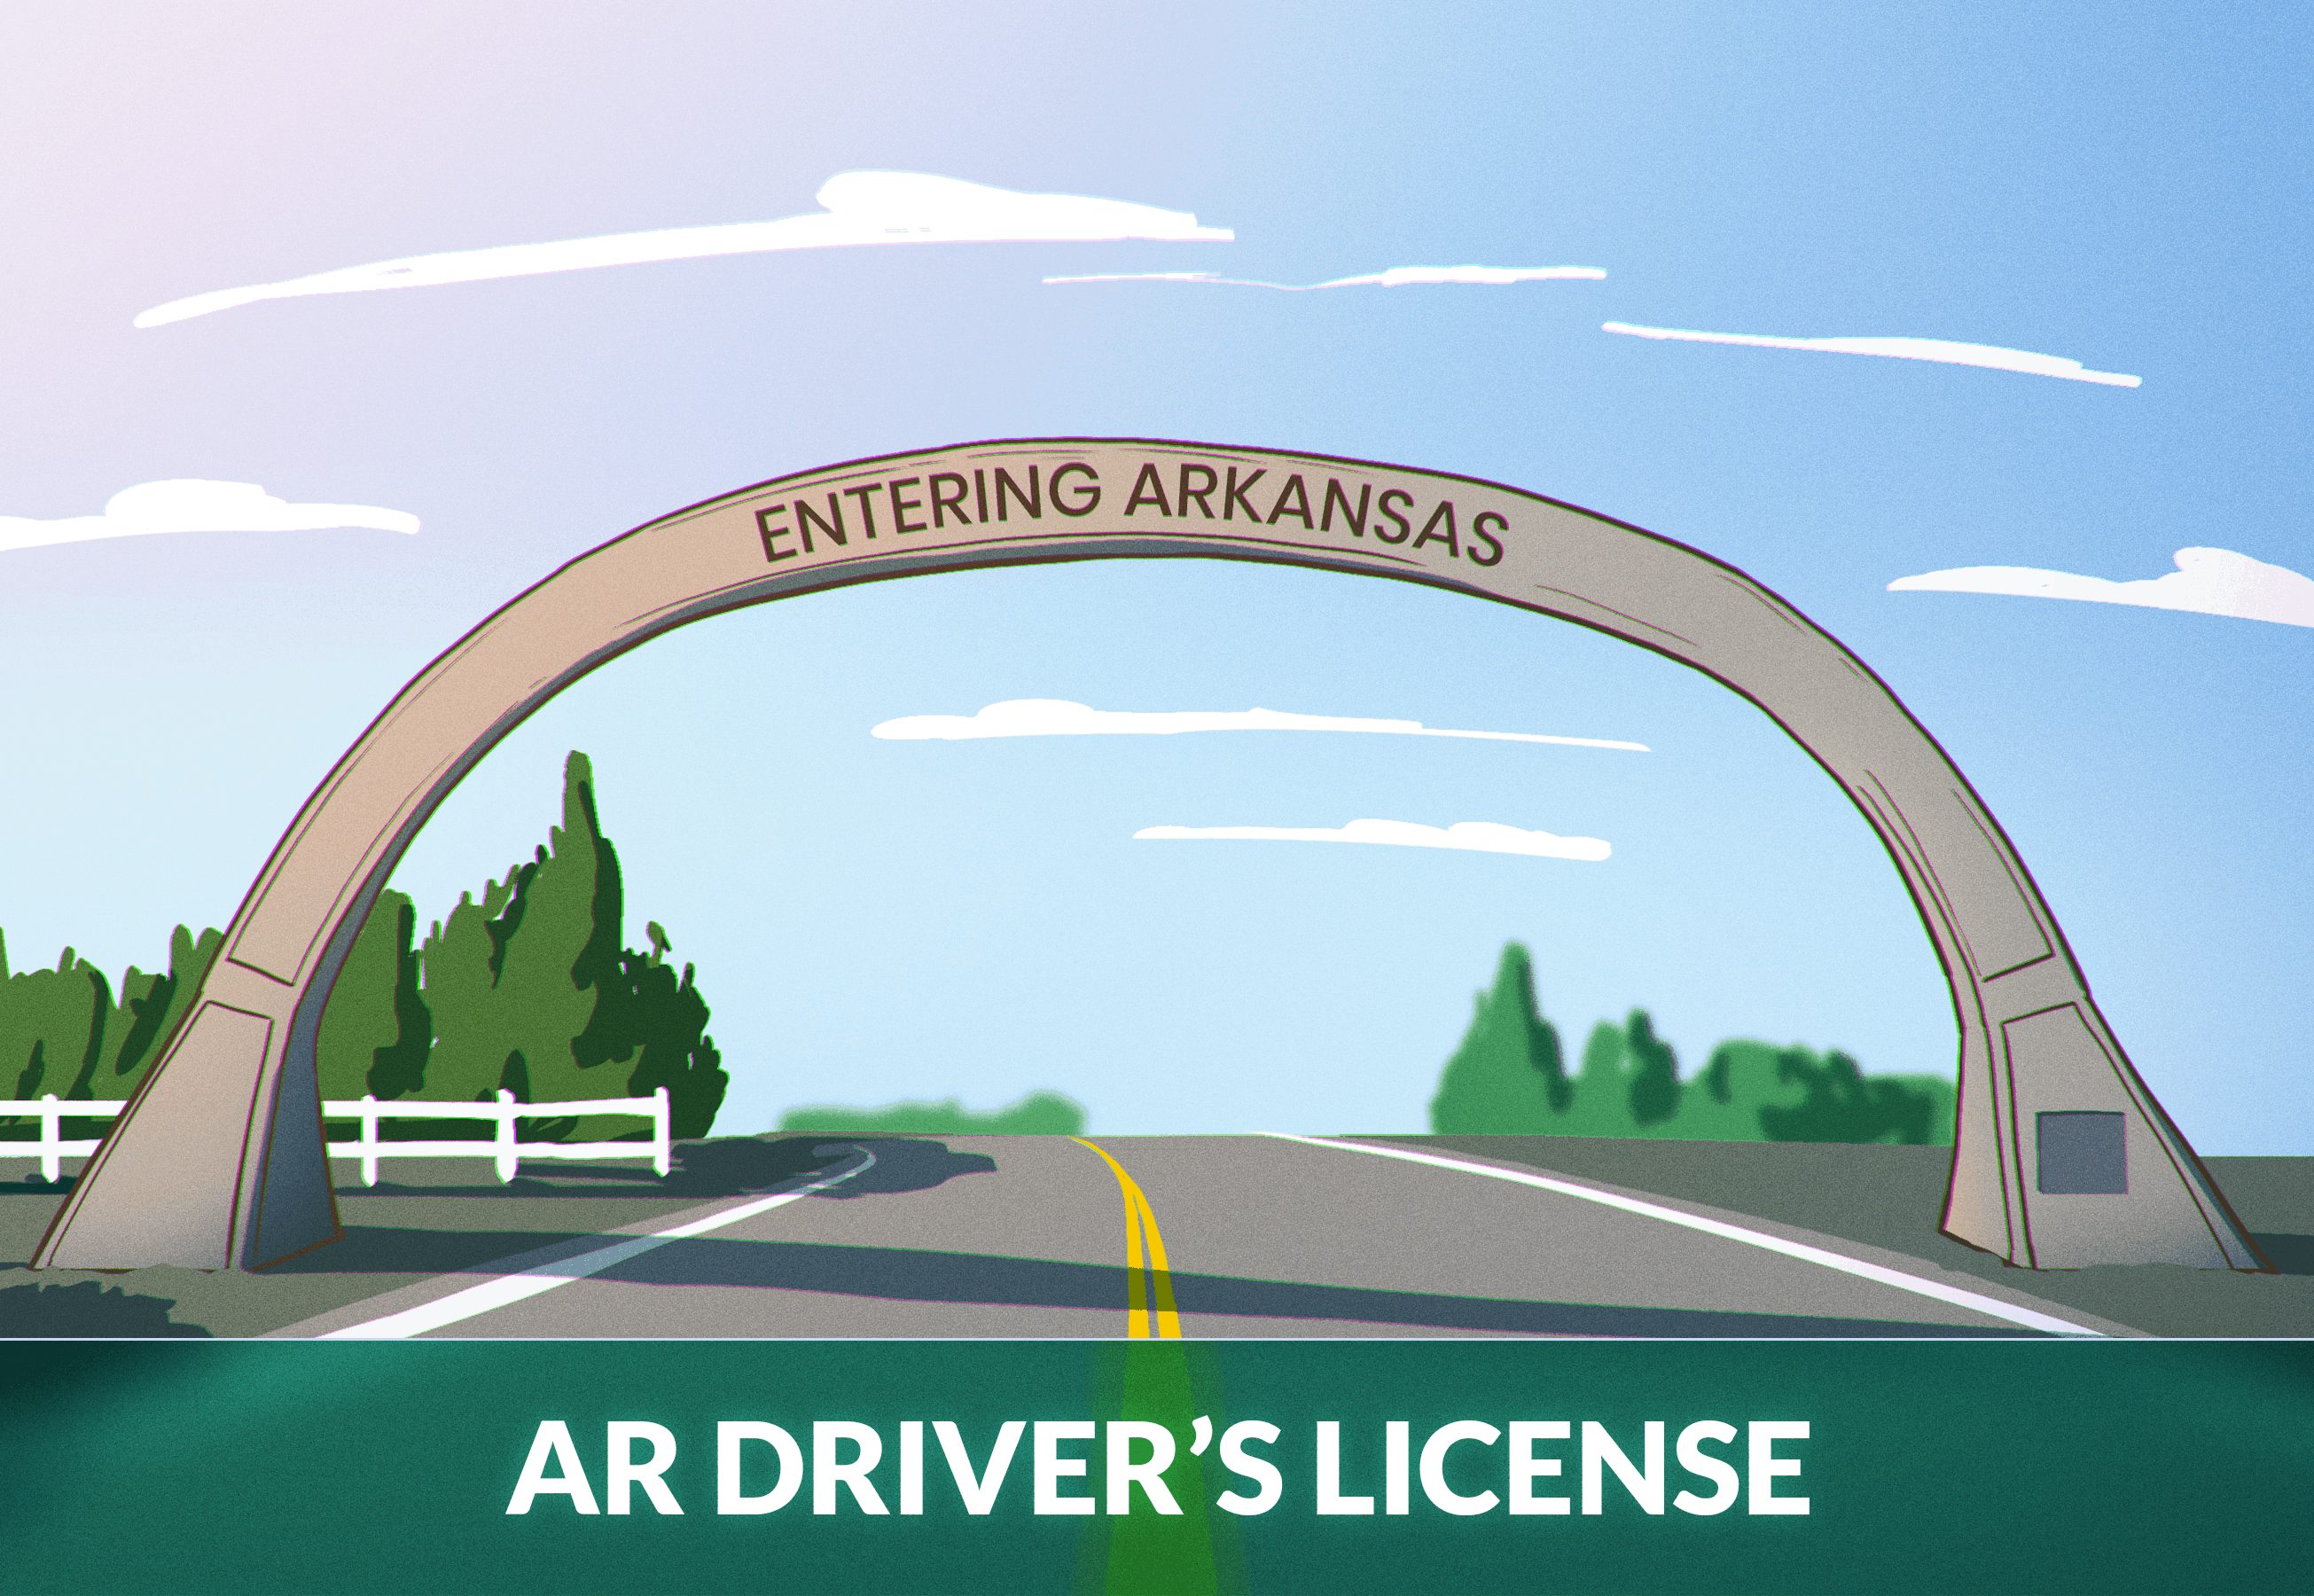 Arkansas plumber installer license prep class download the new for ios